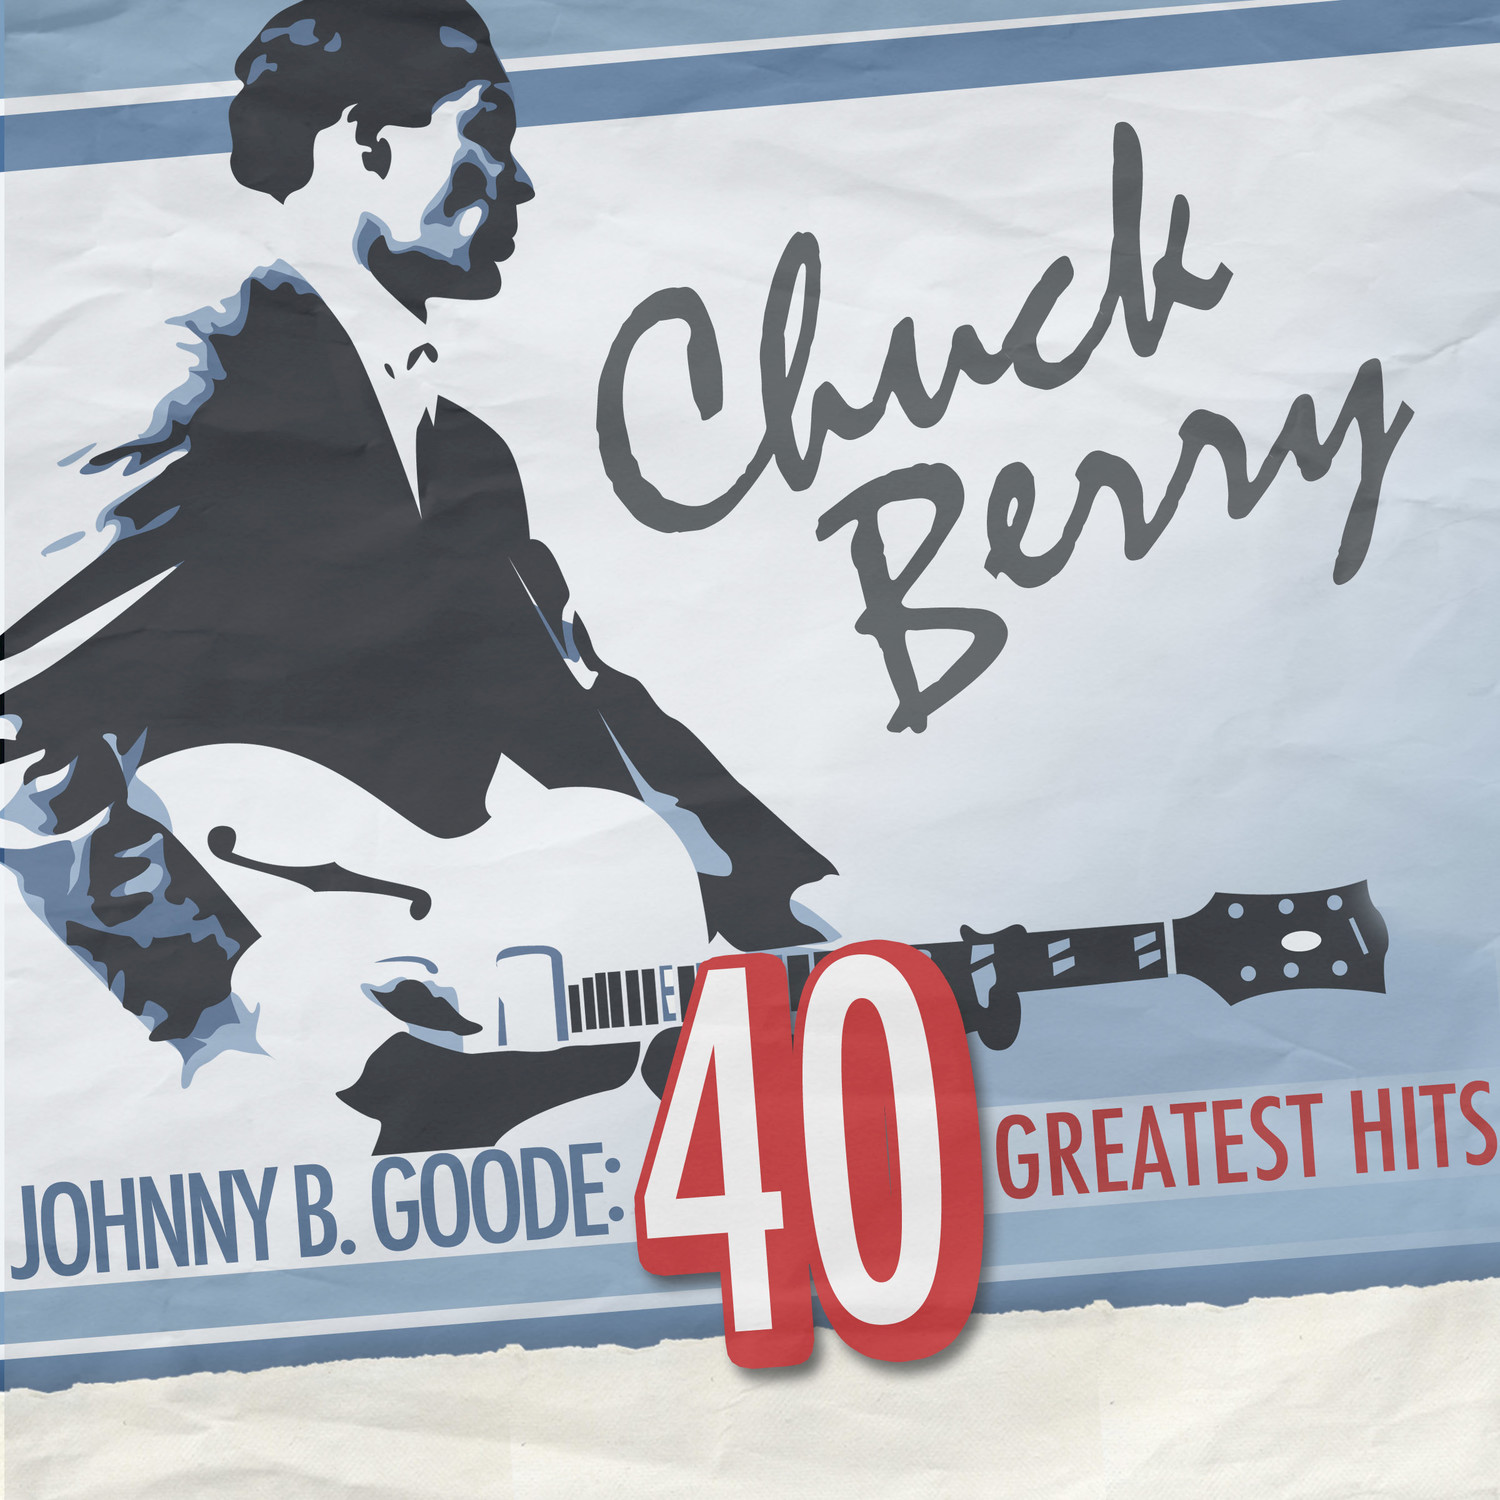 Johnny B. Goode: 40 Greatest Hits